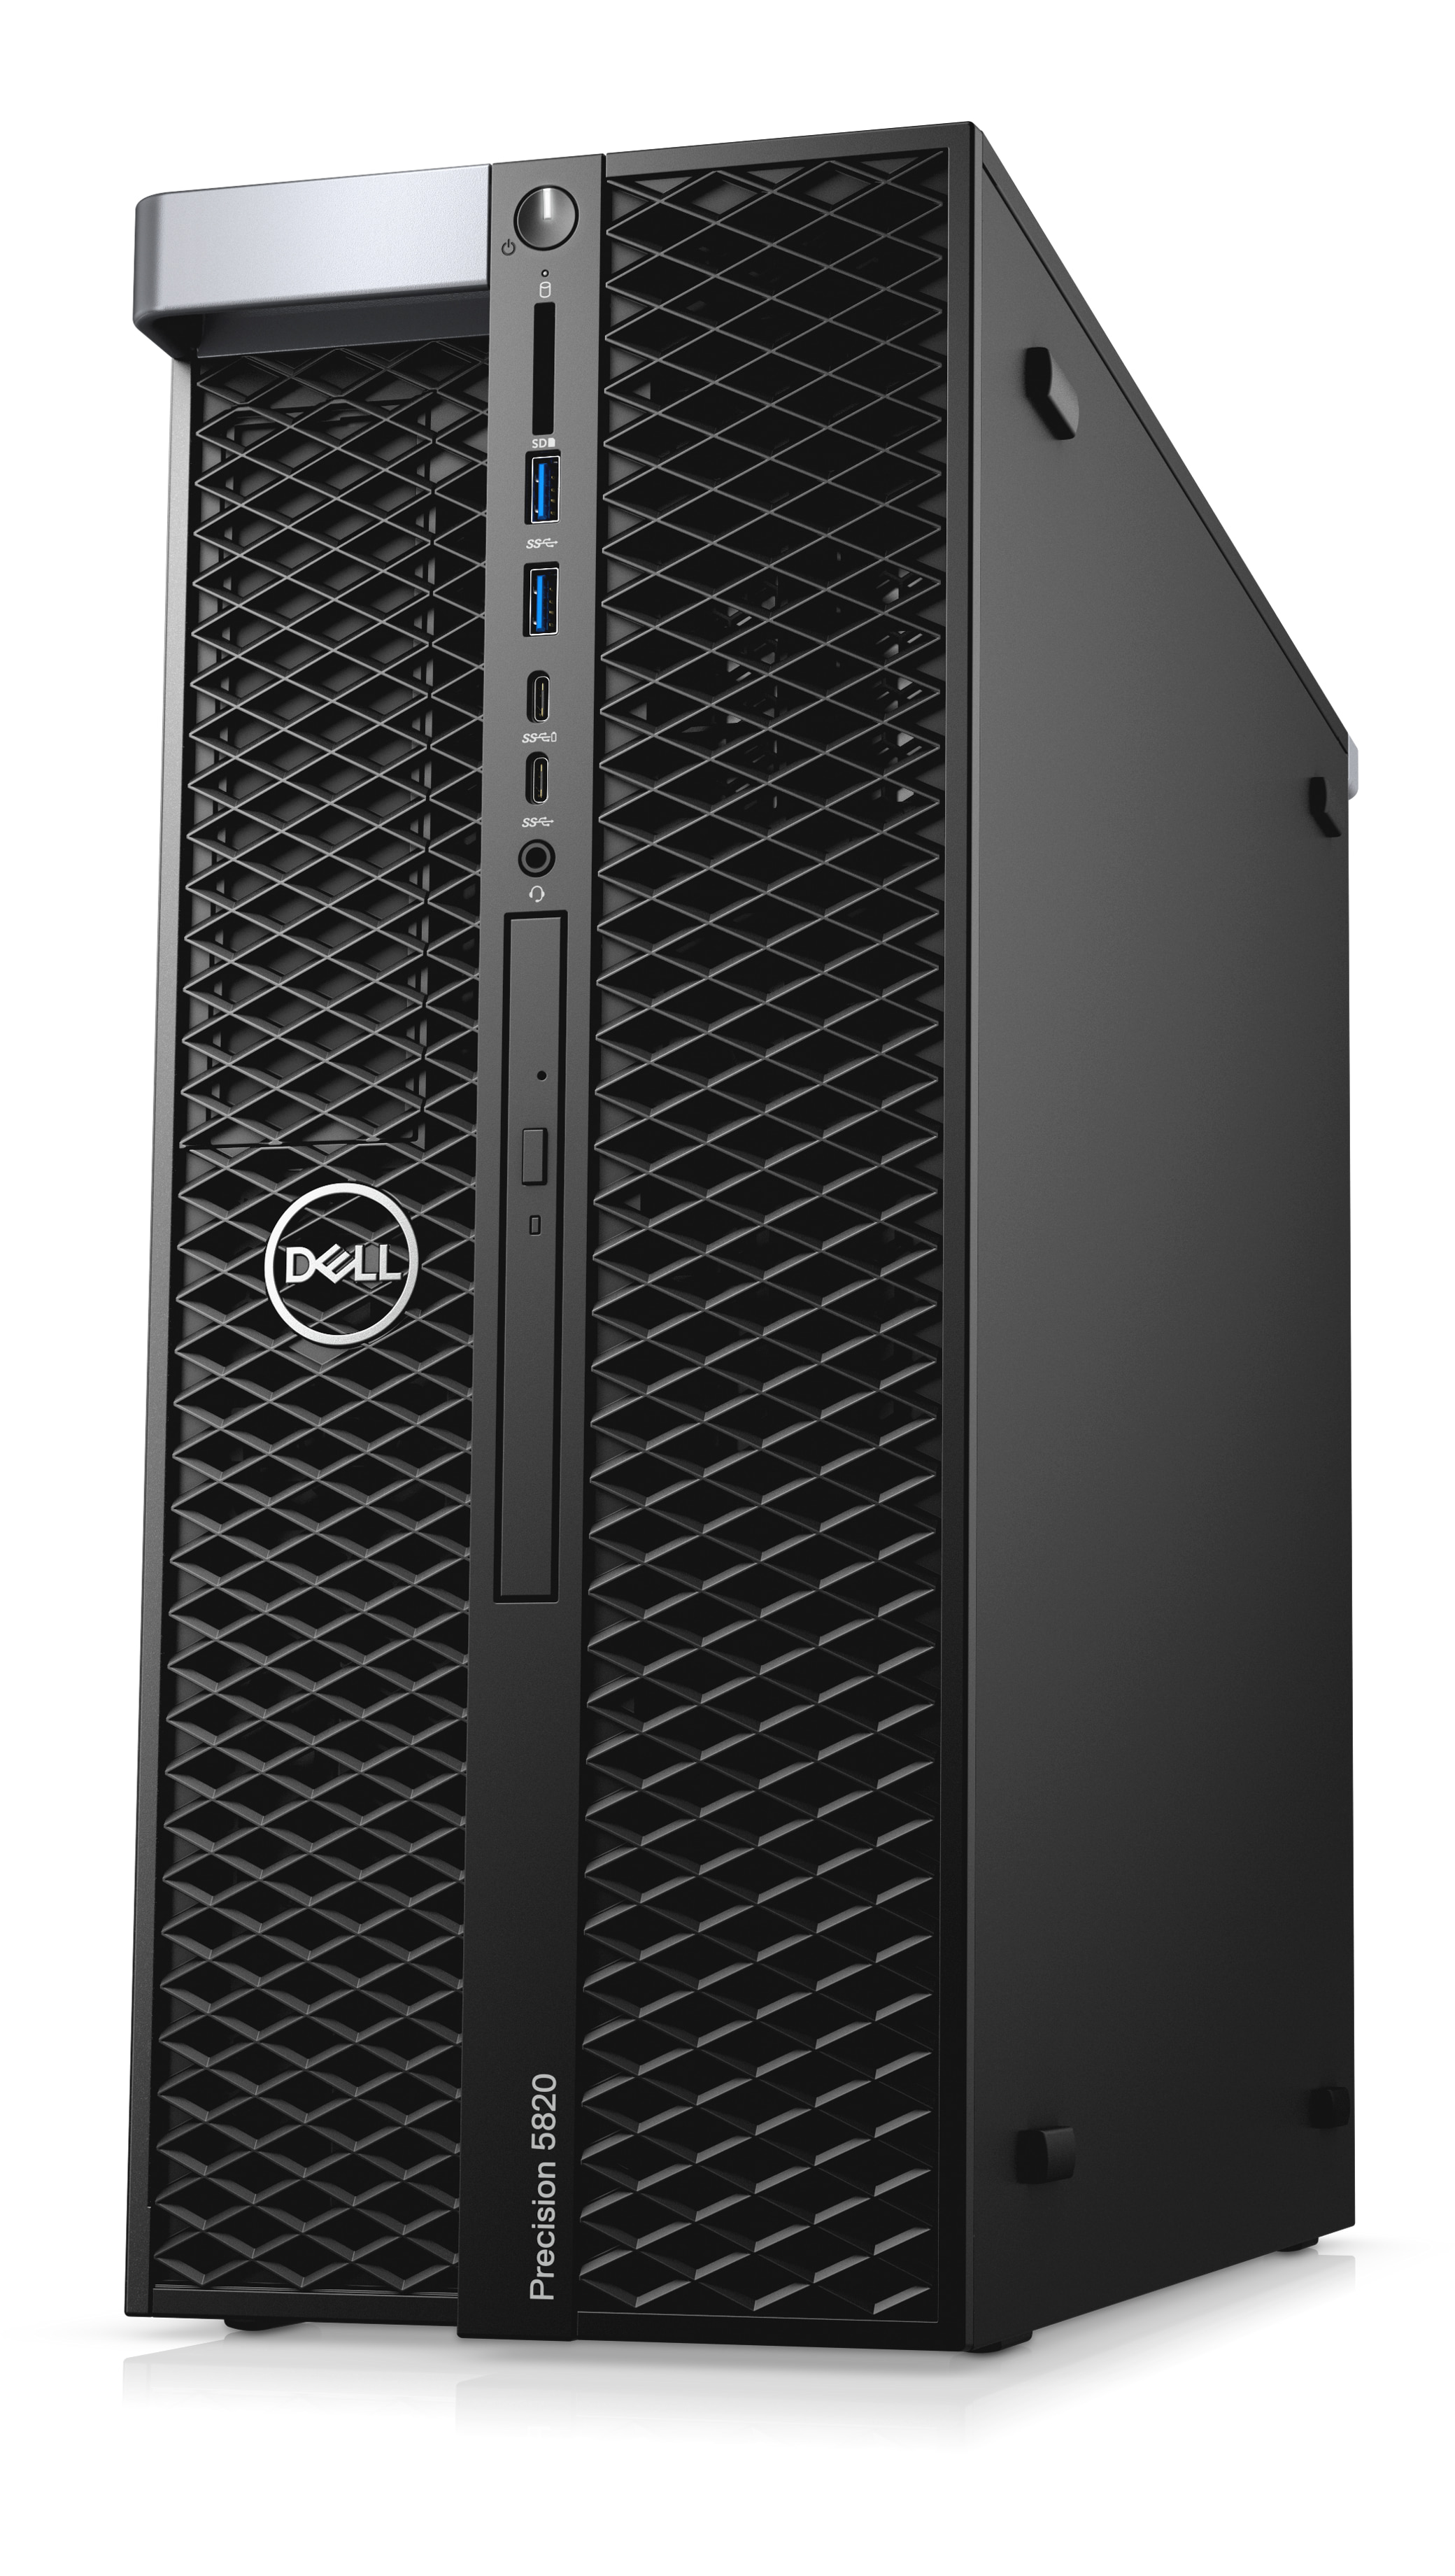 Precision 5820 High Performance Tower Desktop Workstation | Dell USA